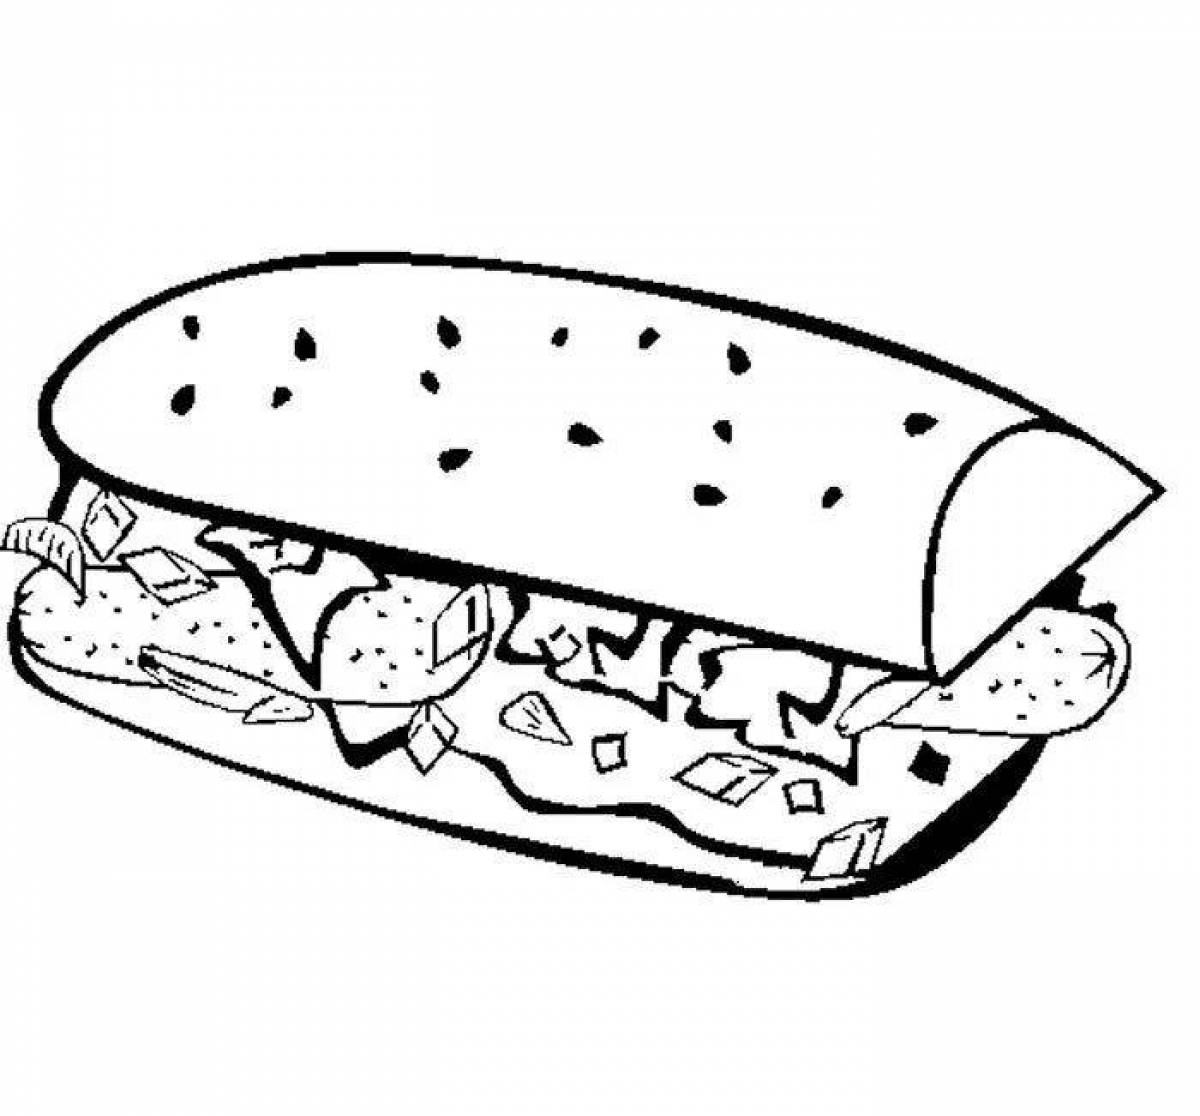 Sandwich #3